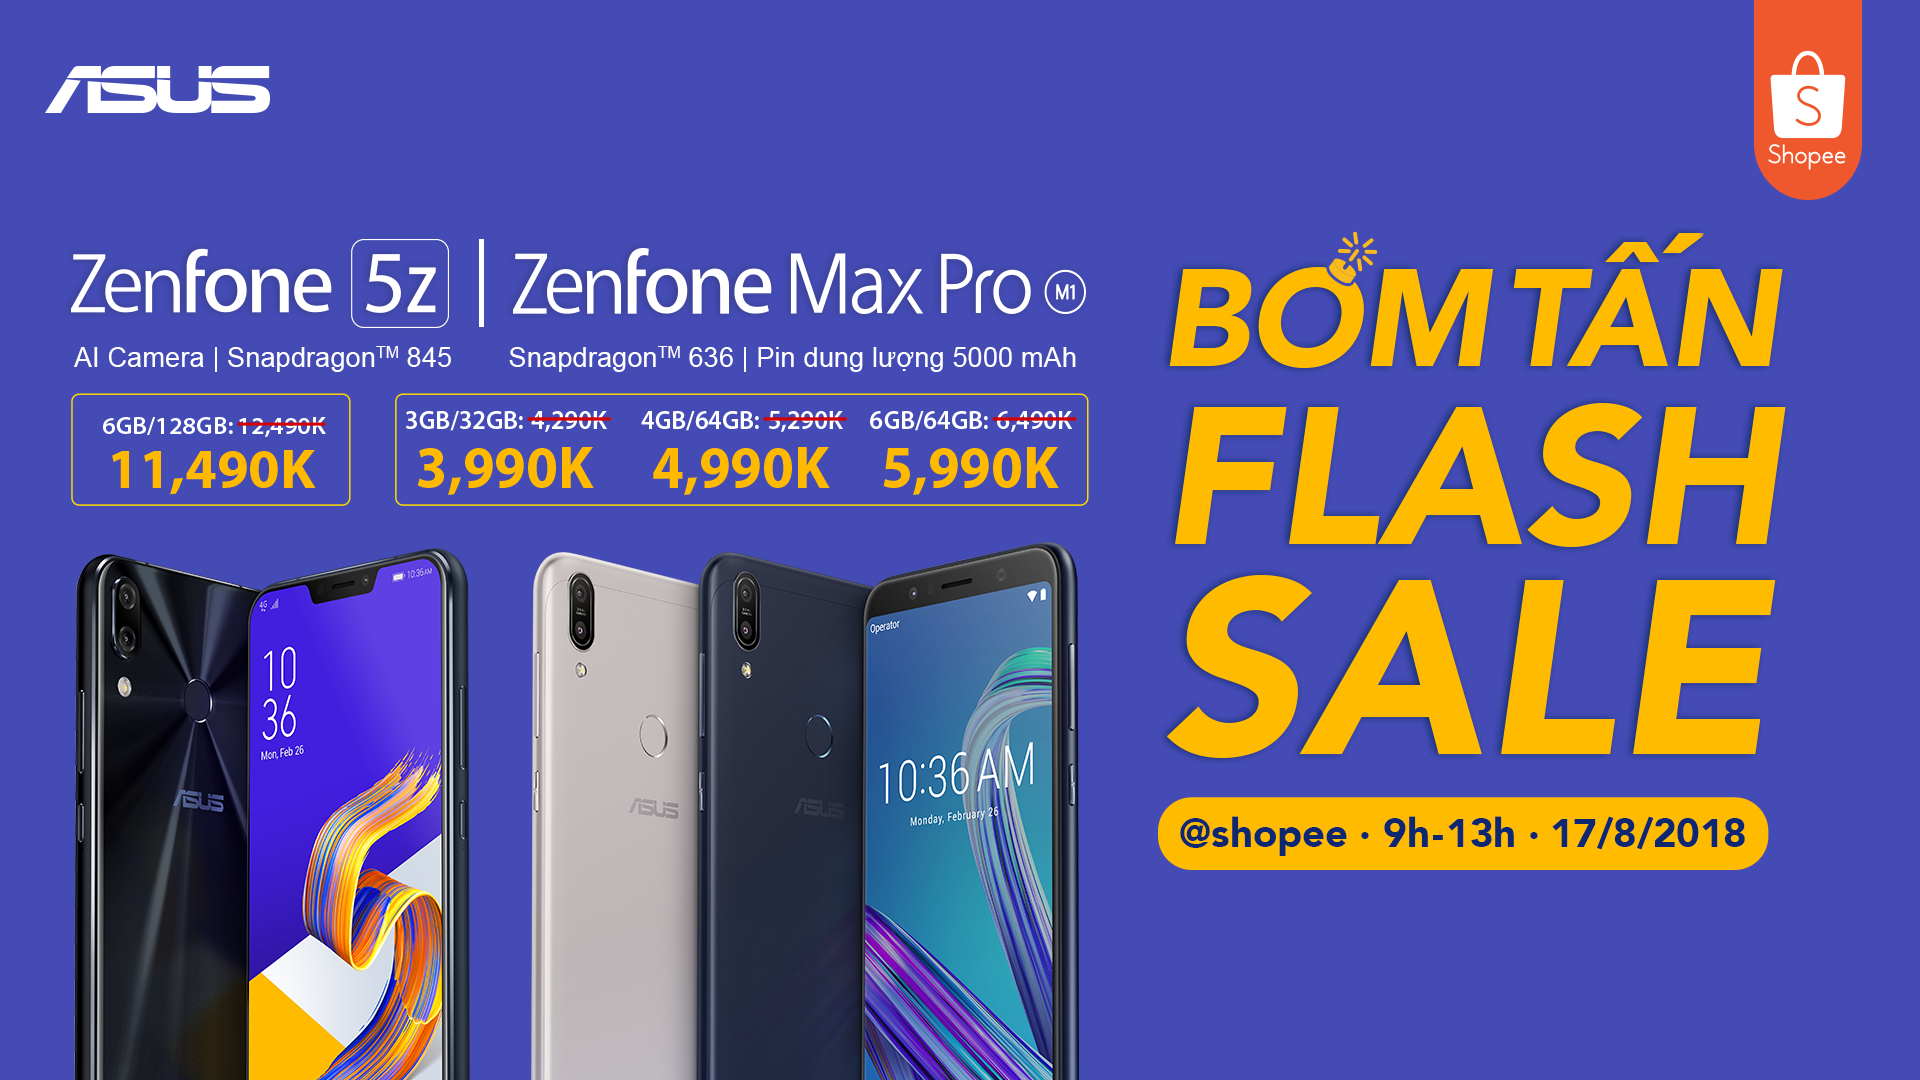 “Bom tấn Flash Sale”: Sở hữu ZenFone Max Pro M1 và ZenFone 5Z với giá tốt nhất